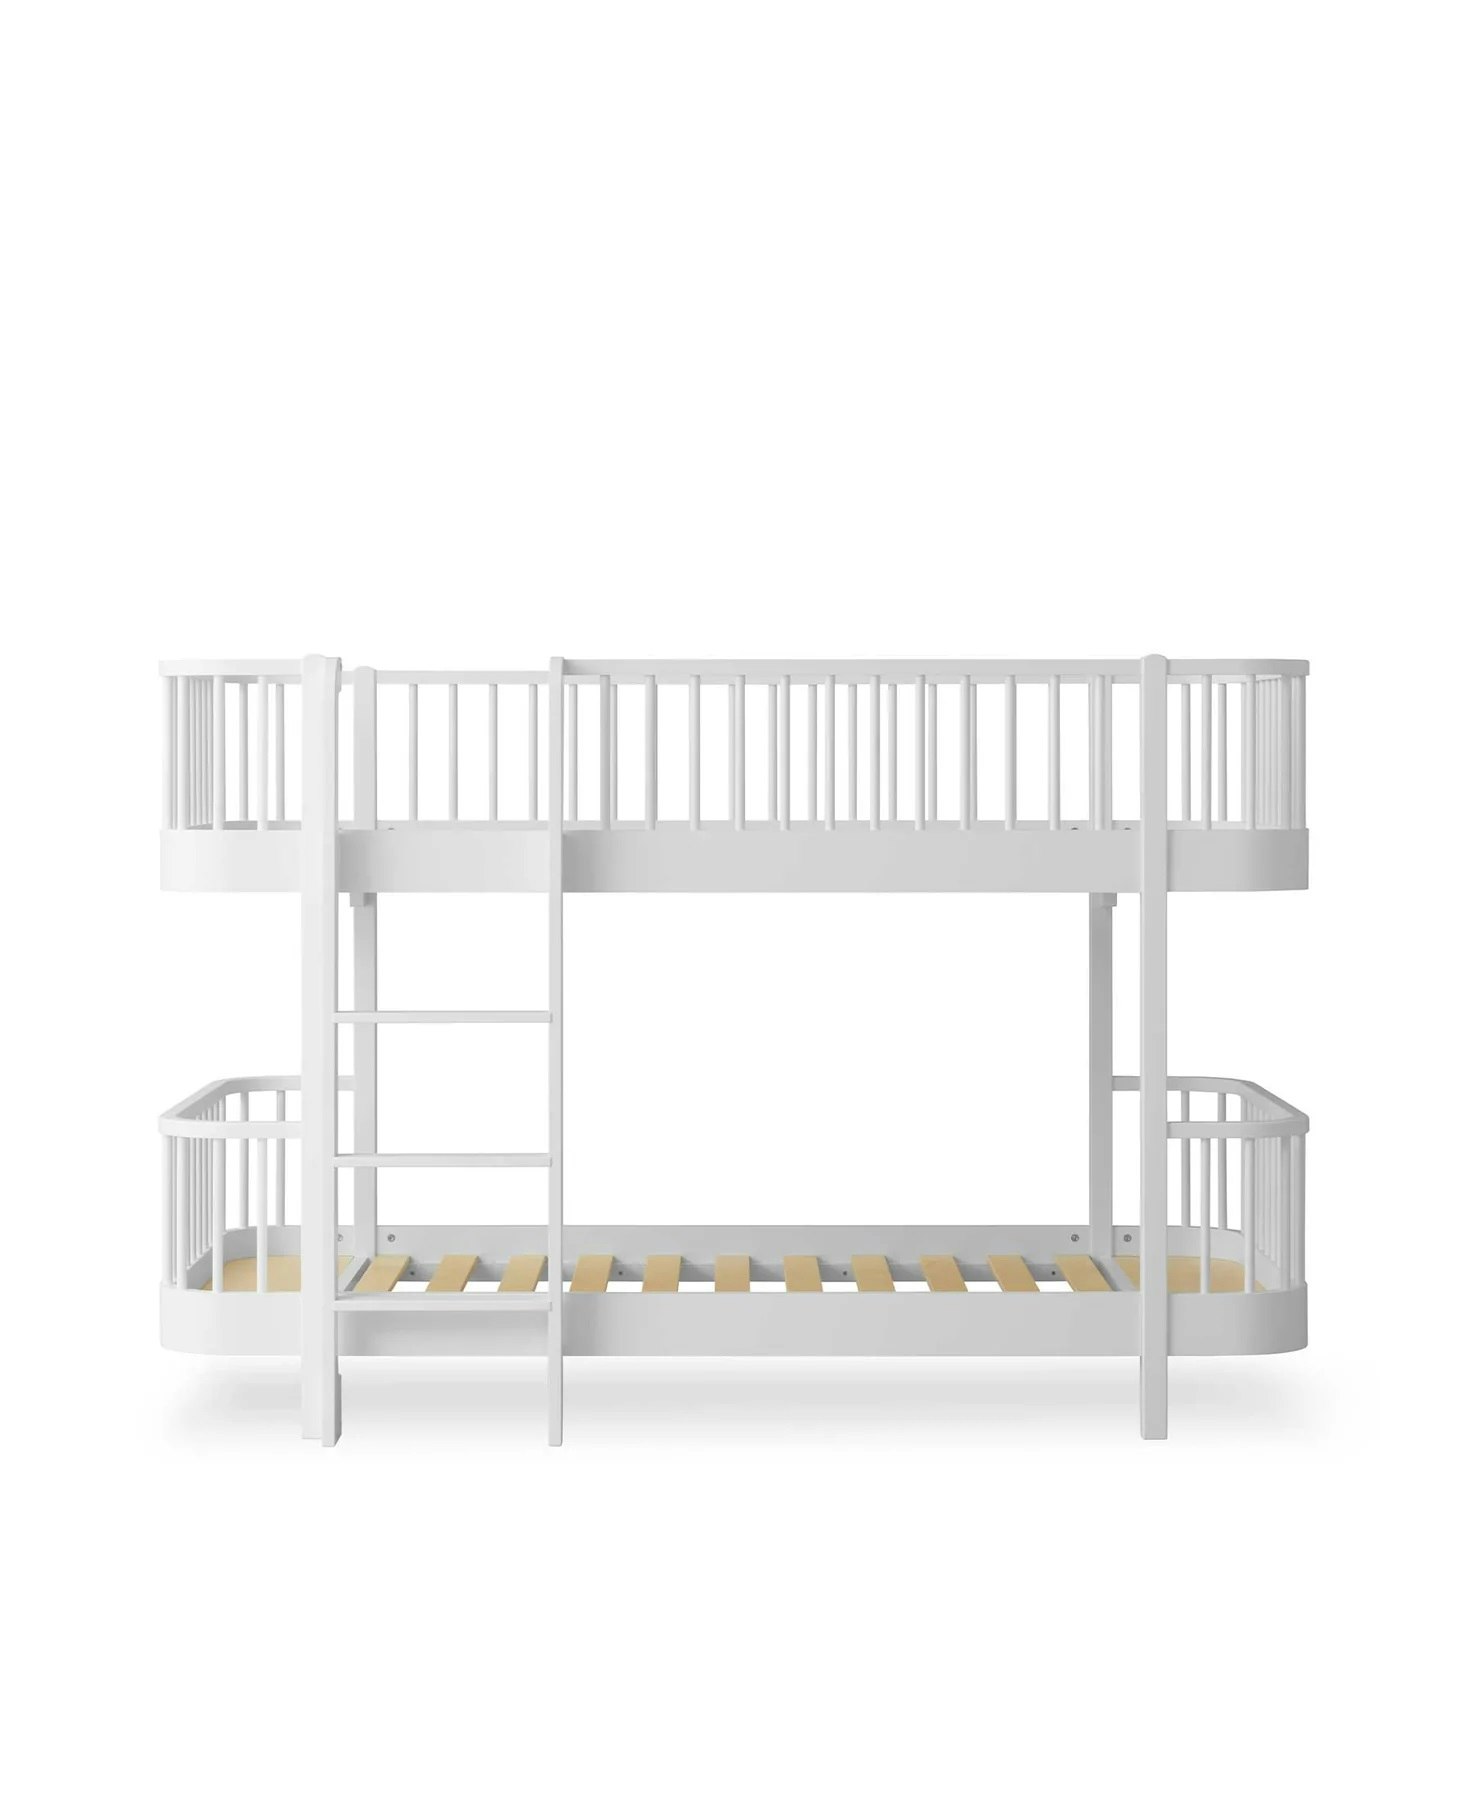 Oliver Furniture, Original low bunk bed, white 